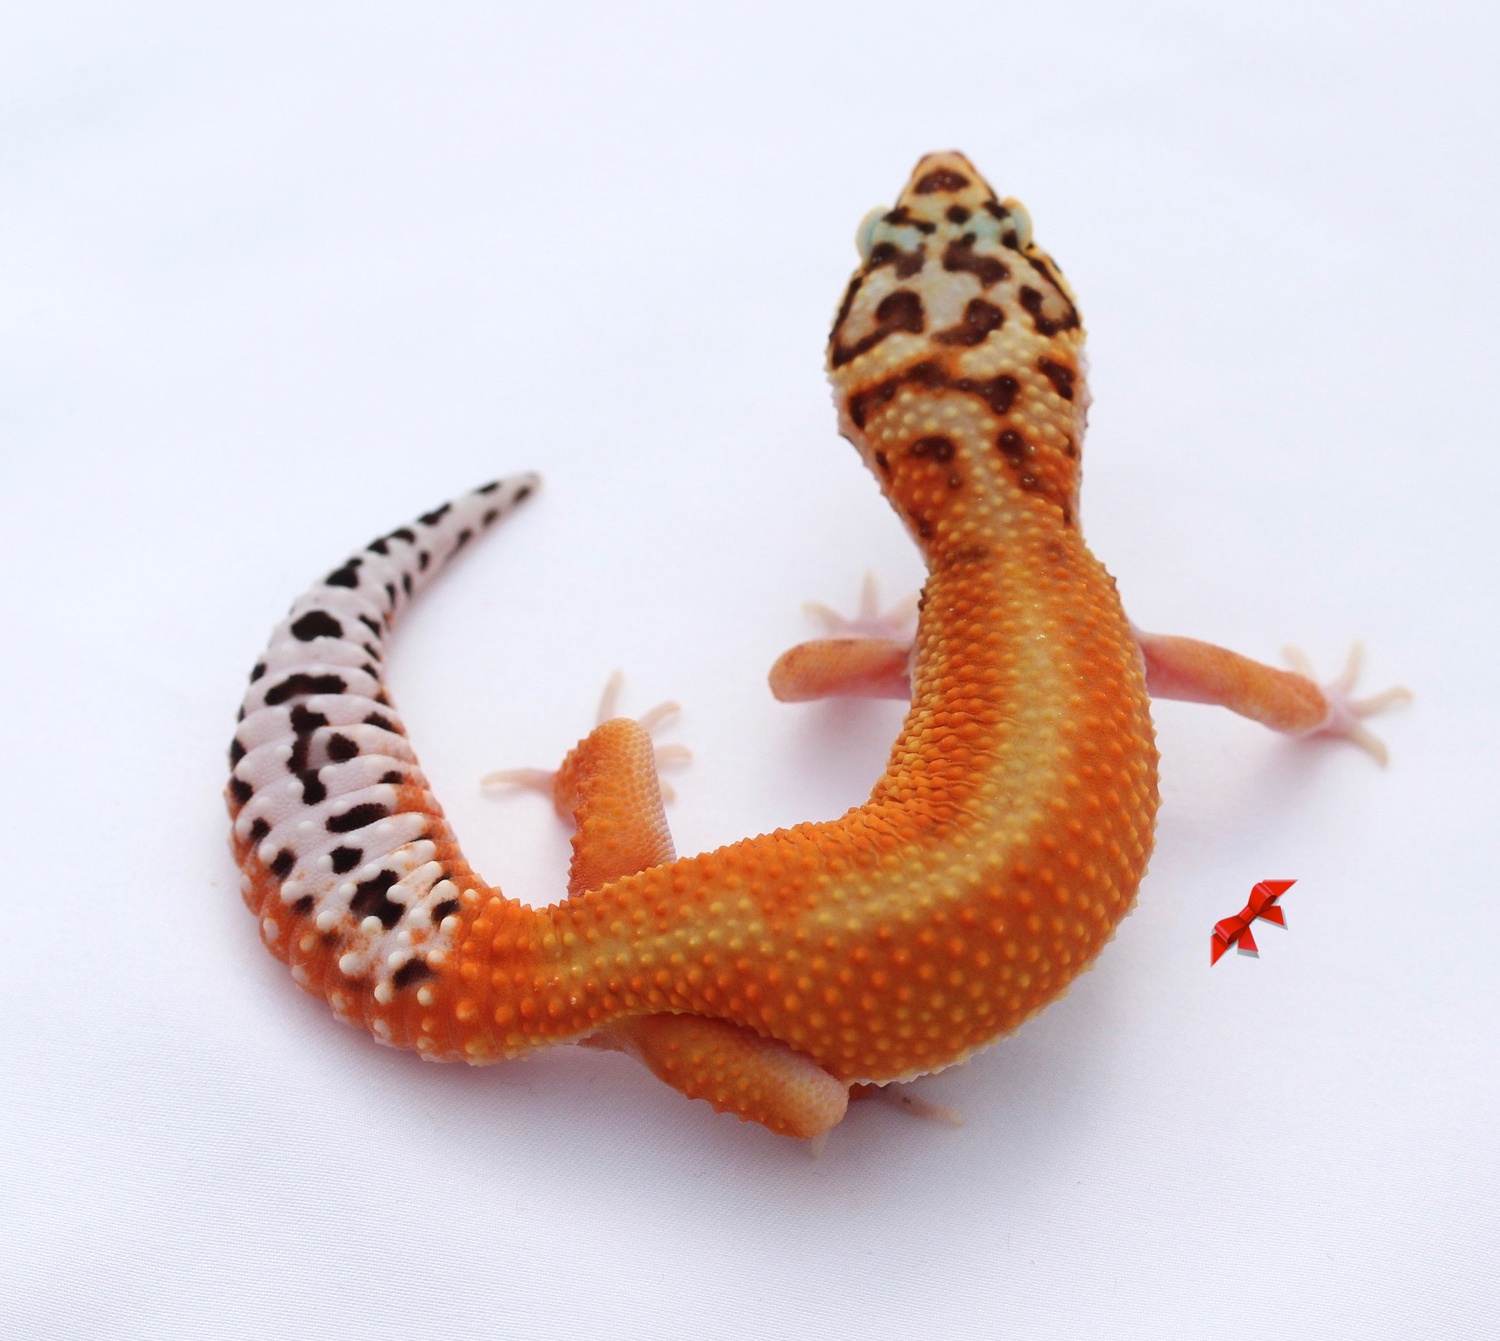 Reverse Stripe Extreme Emerine X G Leopard Gecko by Bold & Bright Geckos